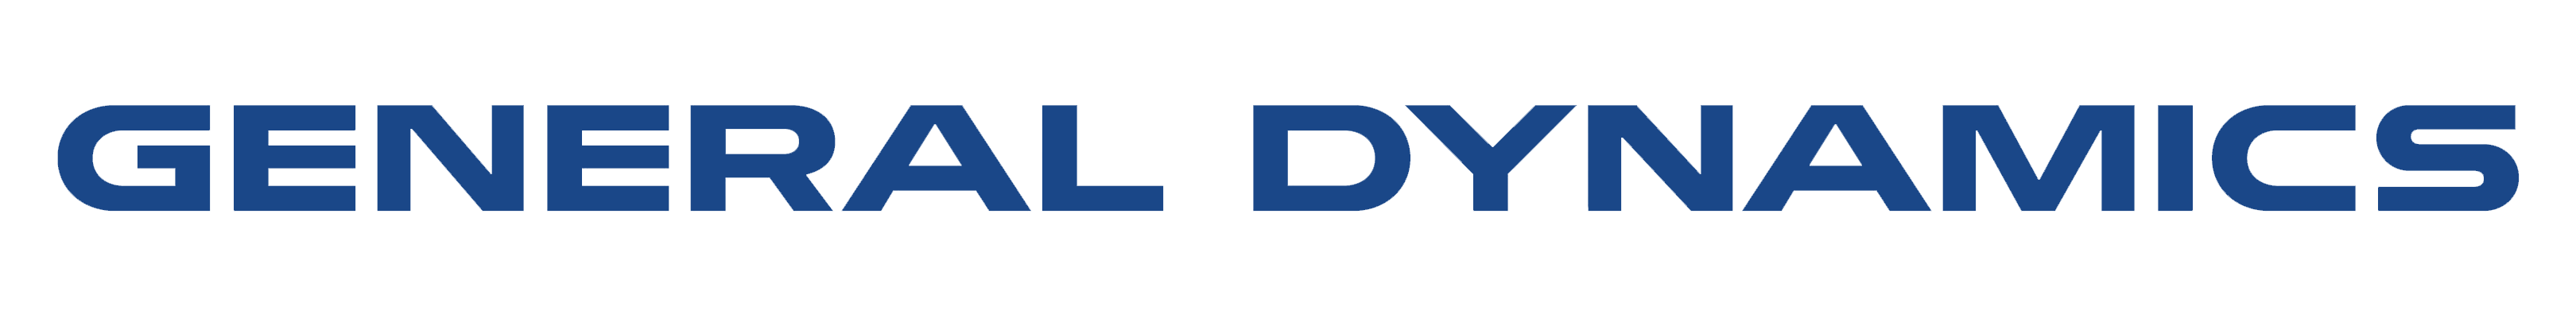 General Dynamics Logo - Logo General Dynamics